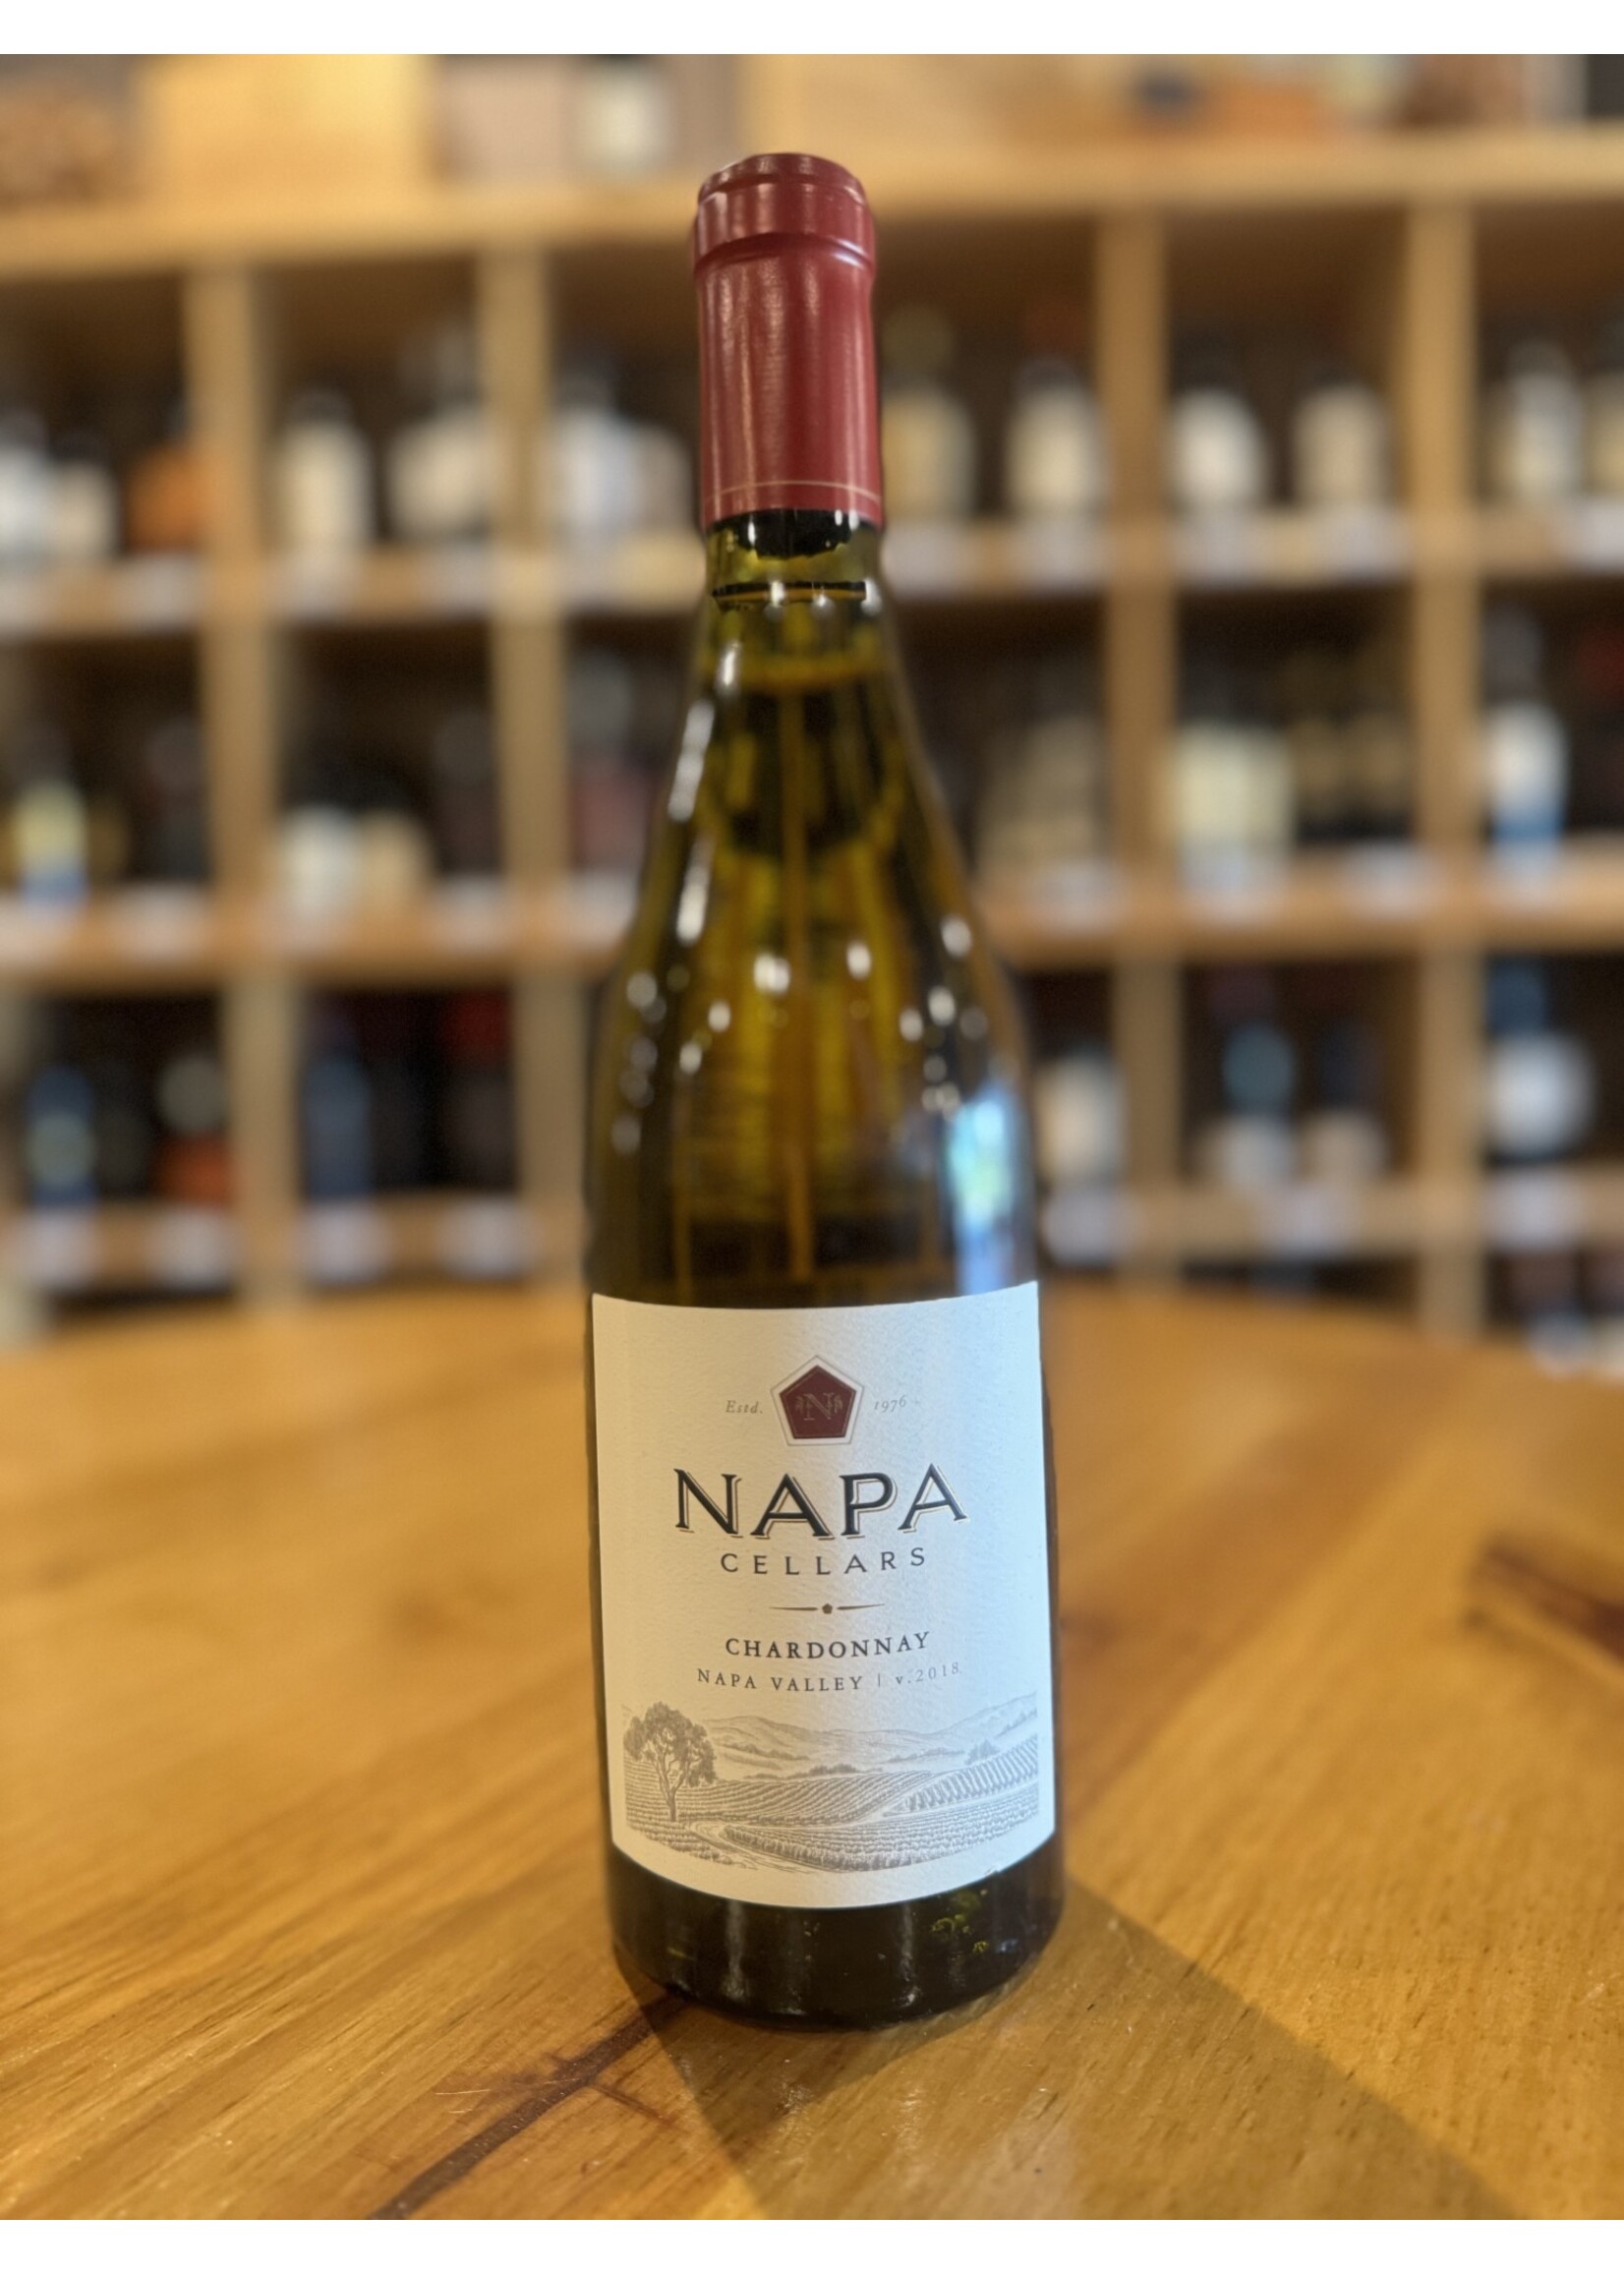 Napa Cellars Chardonnay 2018